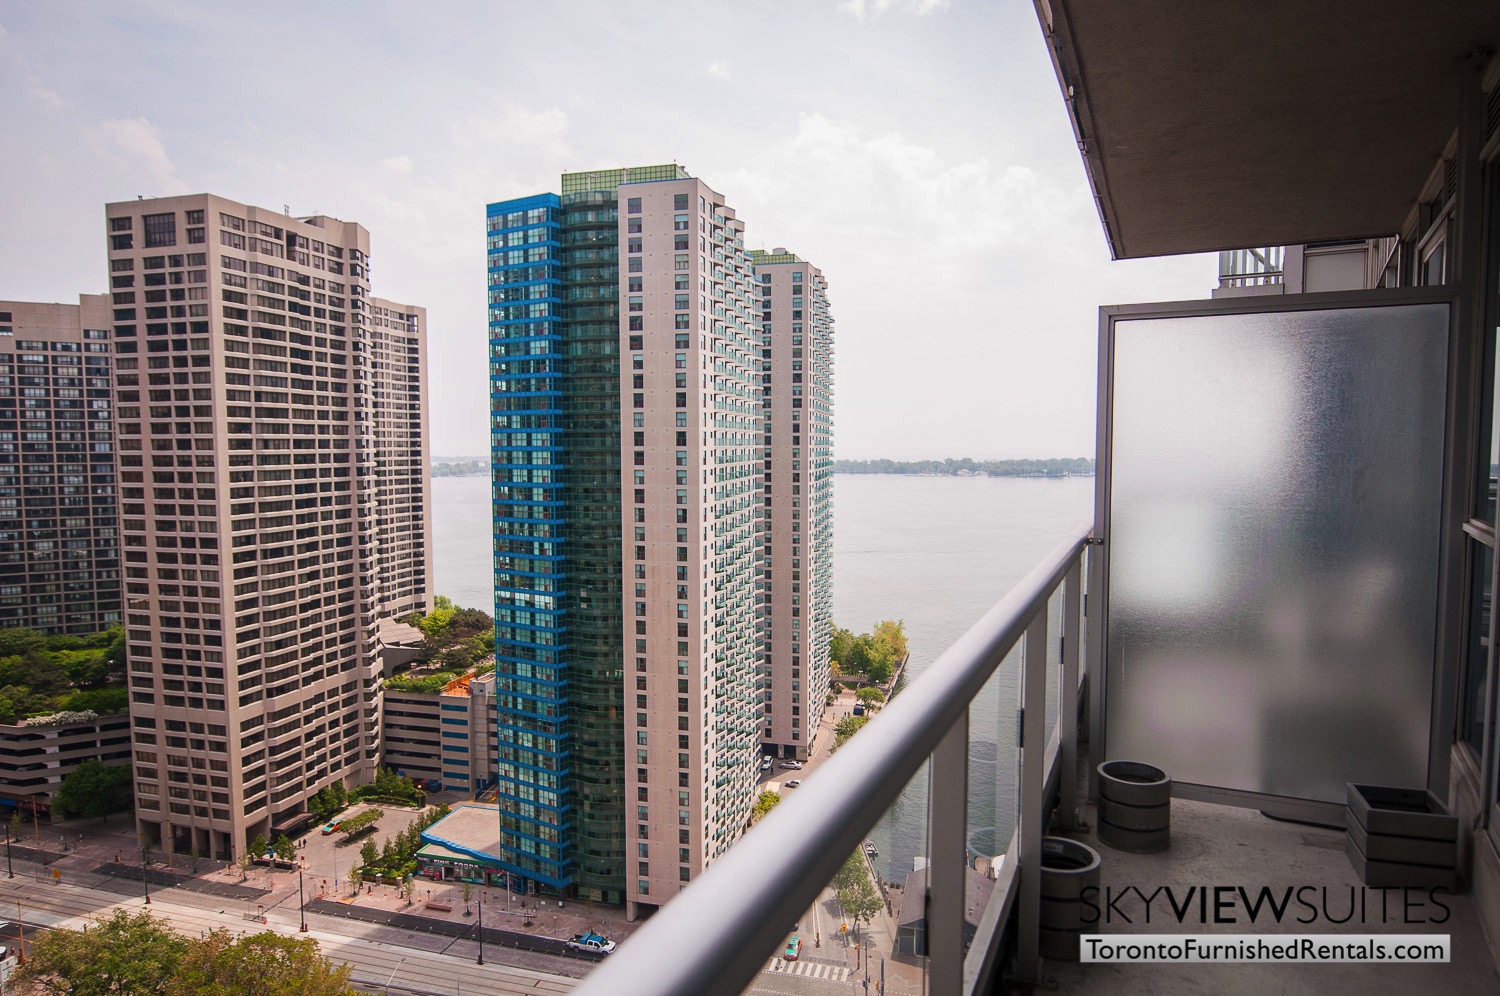 furnished rentals toronto waterfront balcony